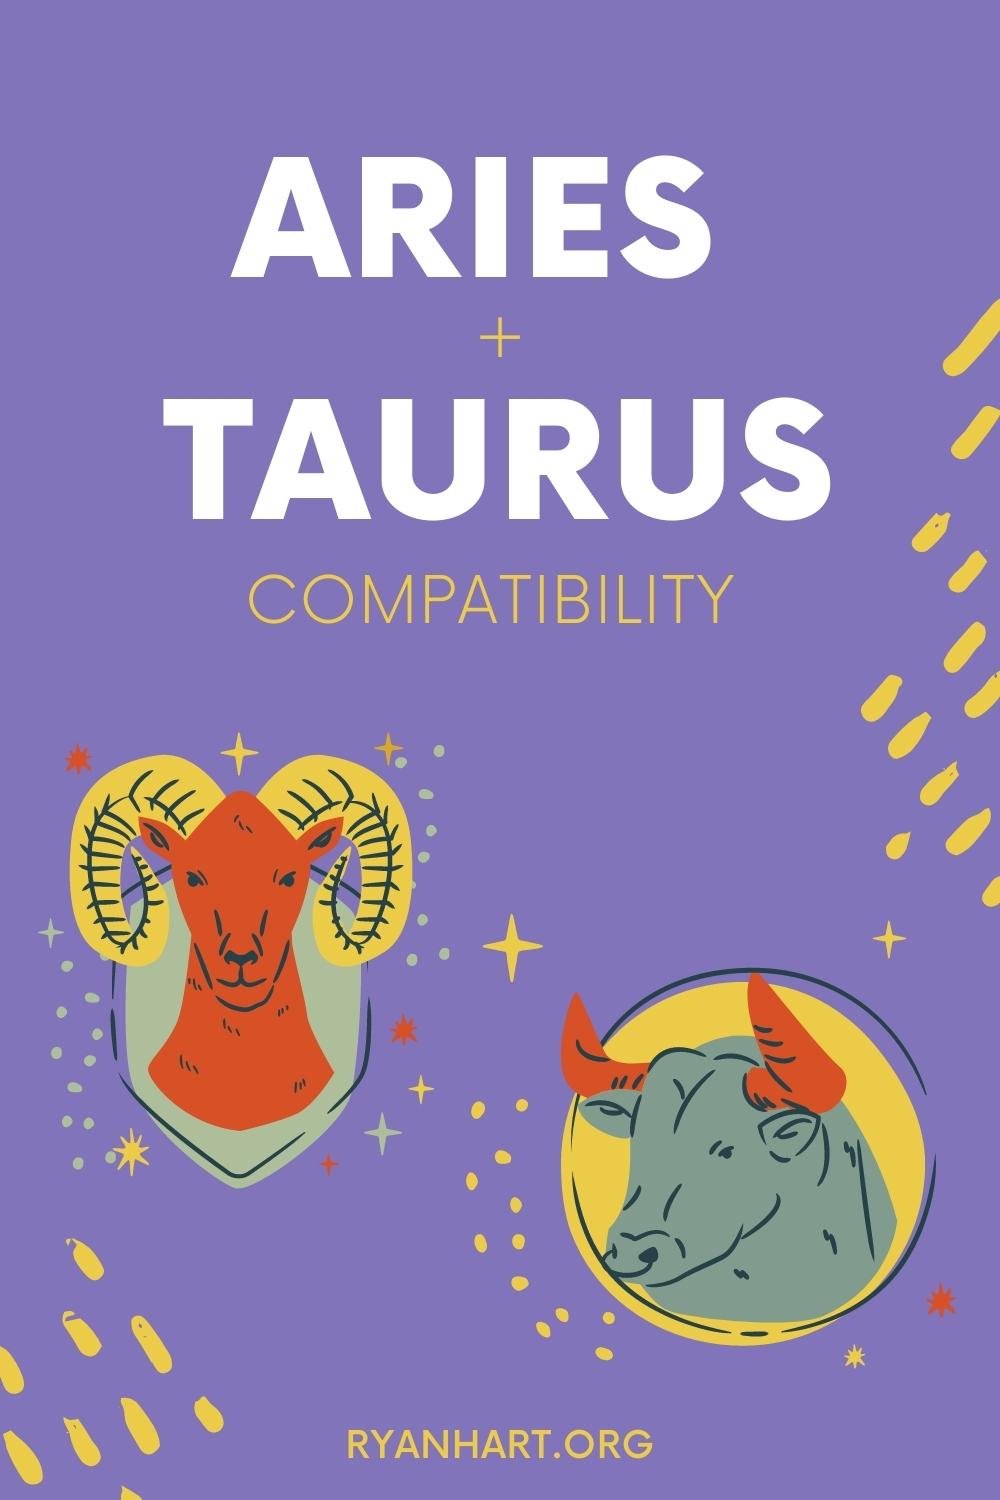 Pin Compatibility Aries Taurus 01 